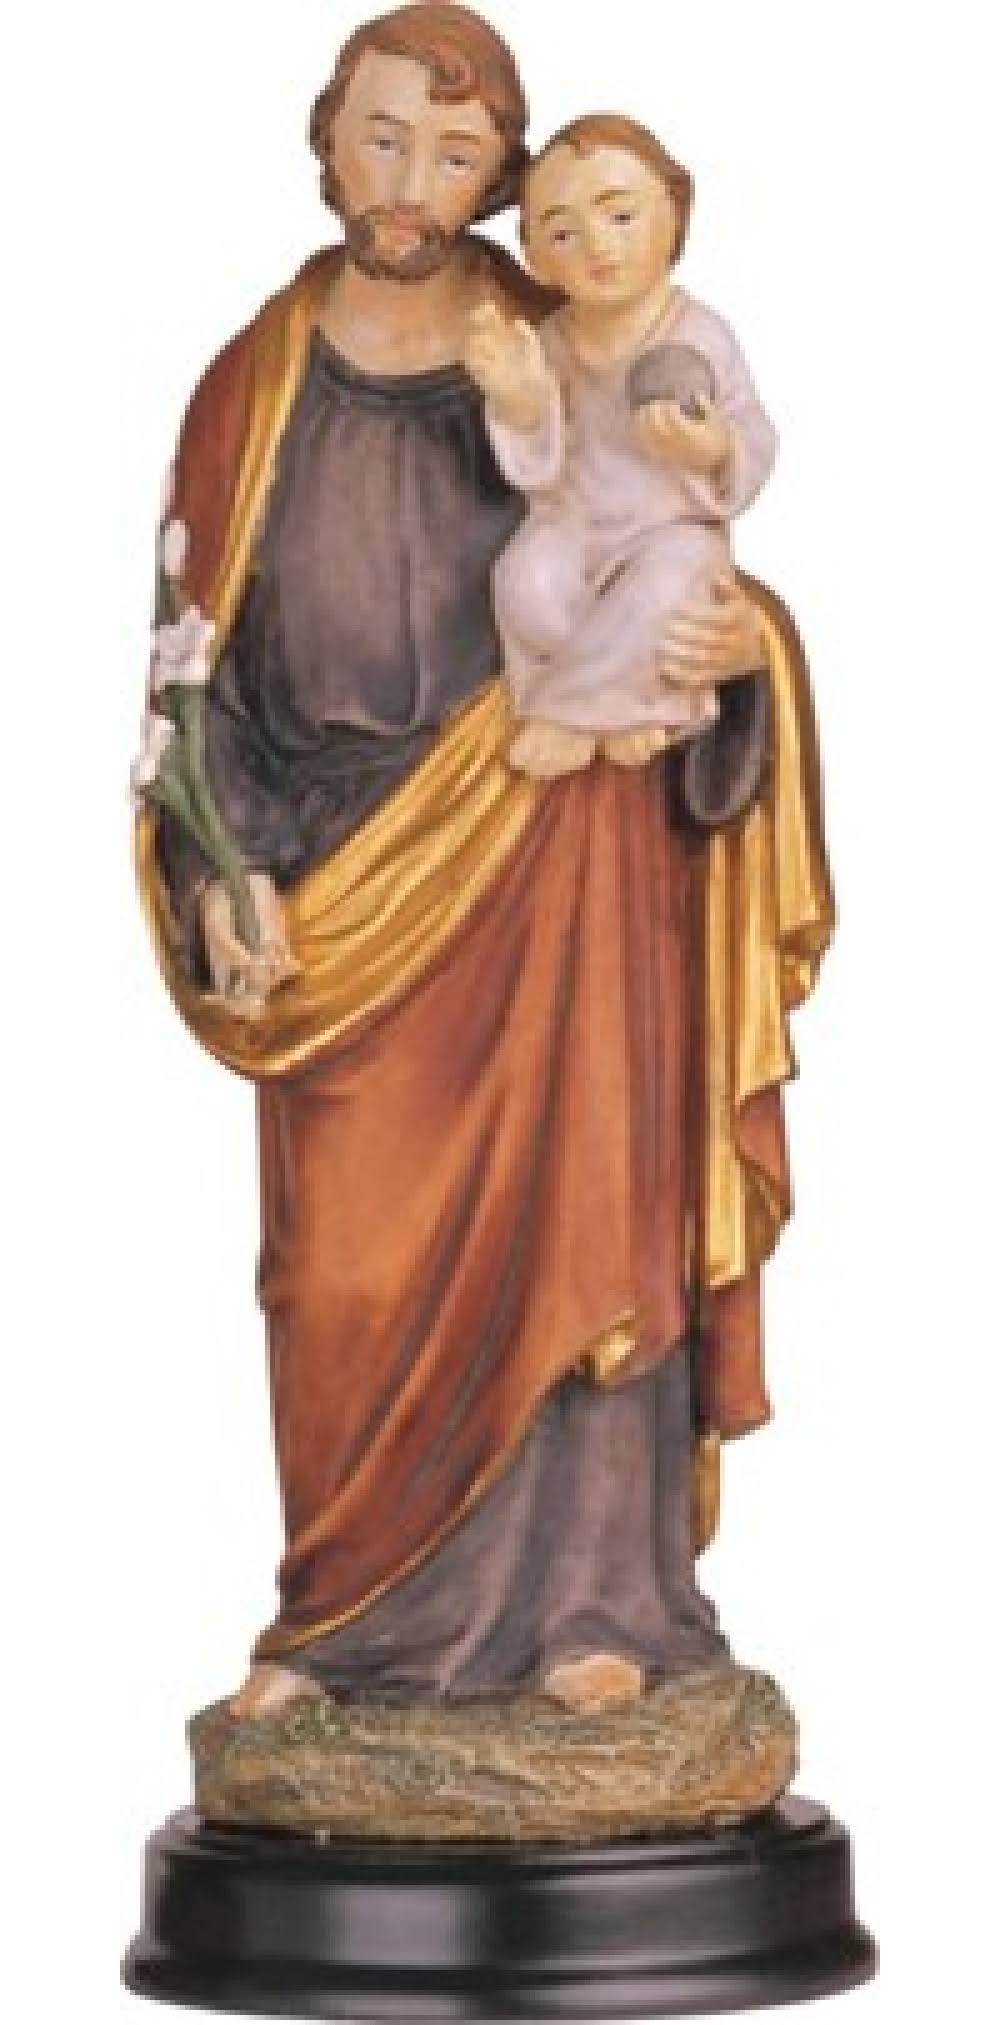 Stealstreet Saint Joseph Holy Figurine Religious Statue Decor, 5"